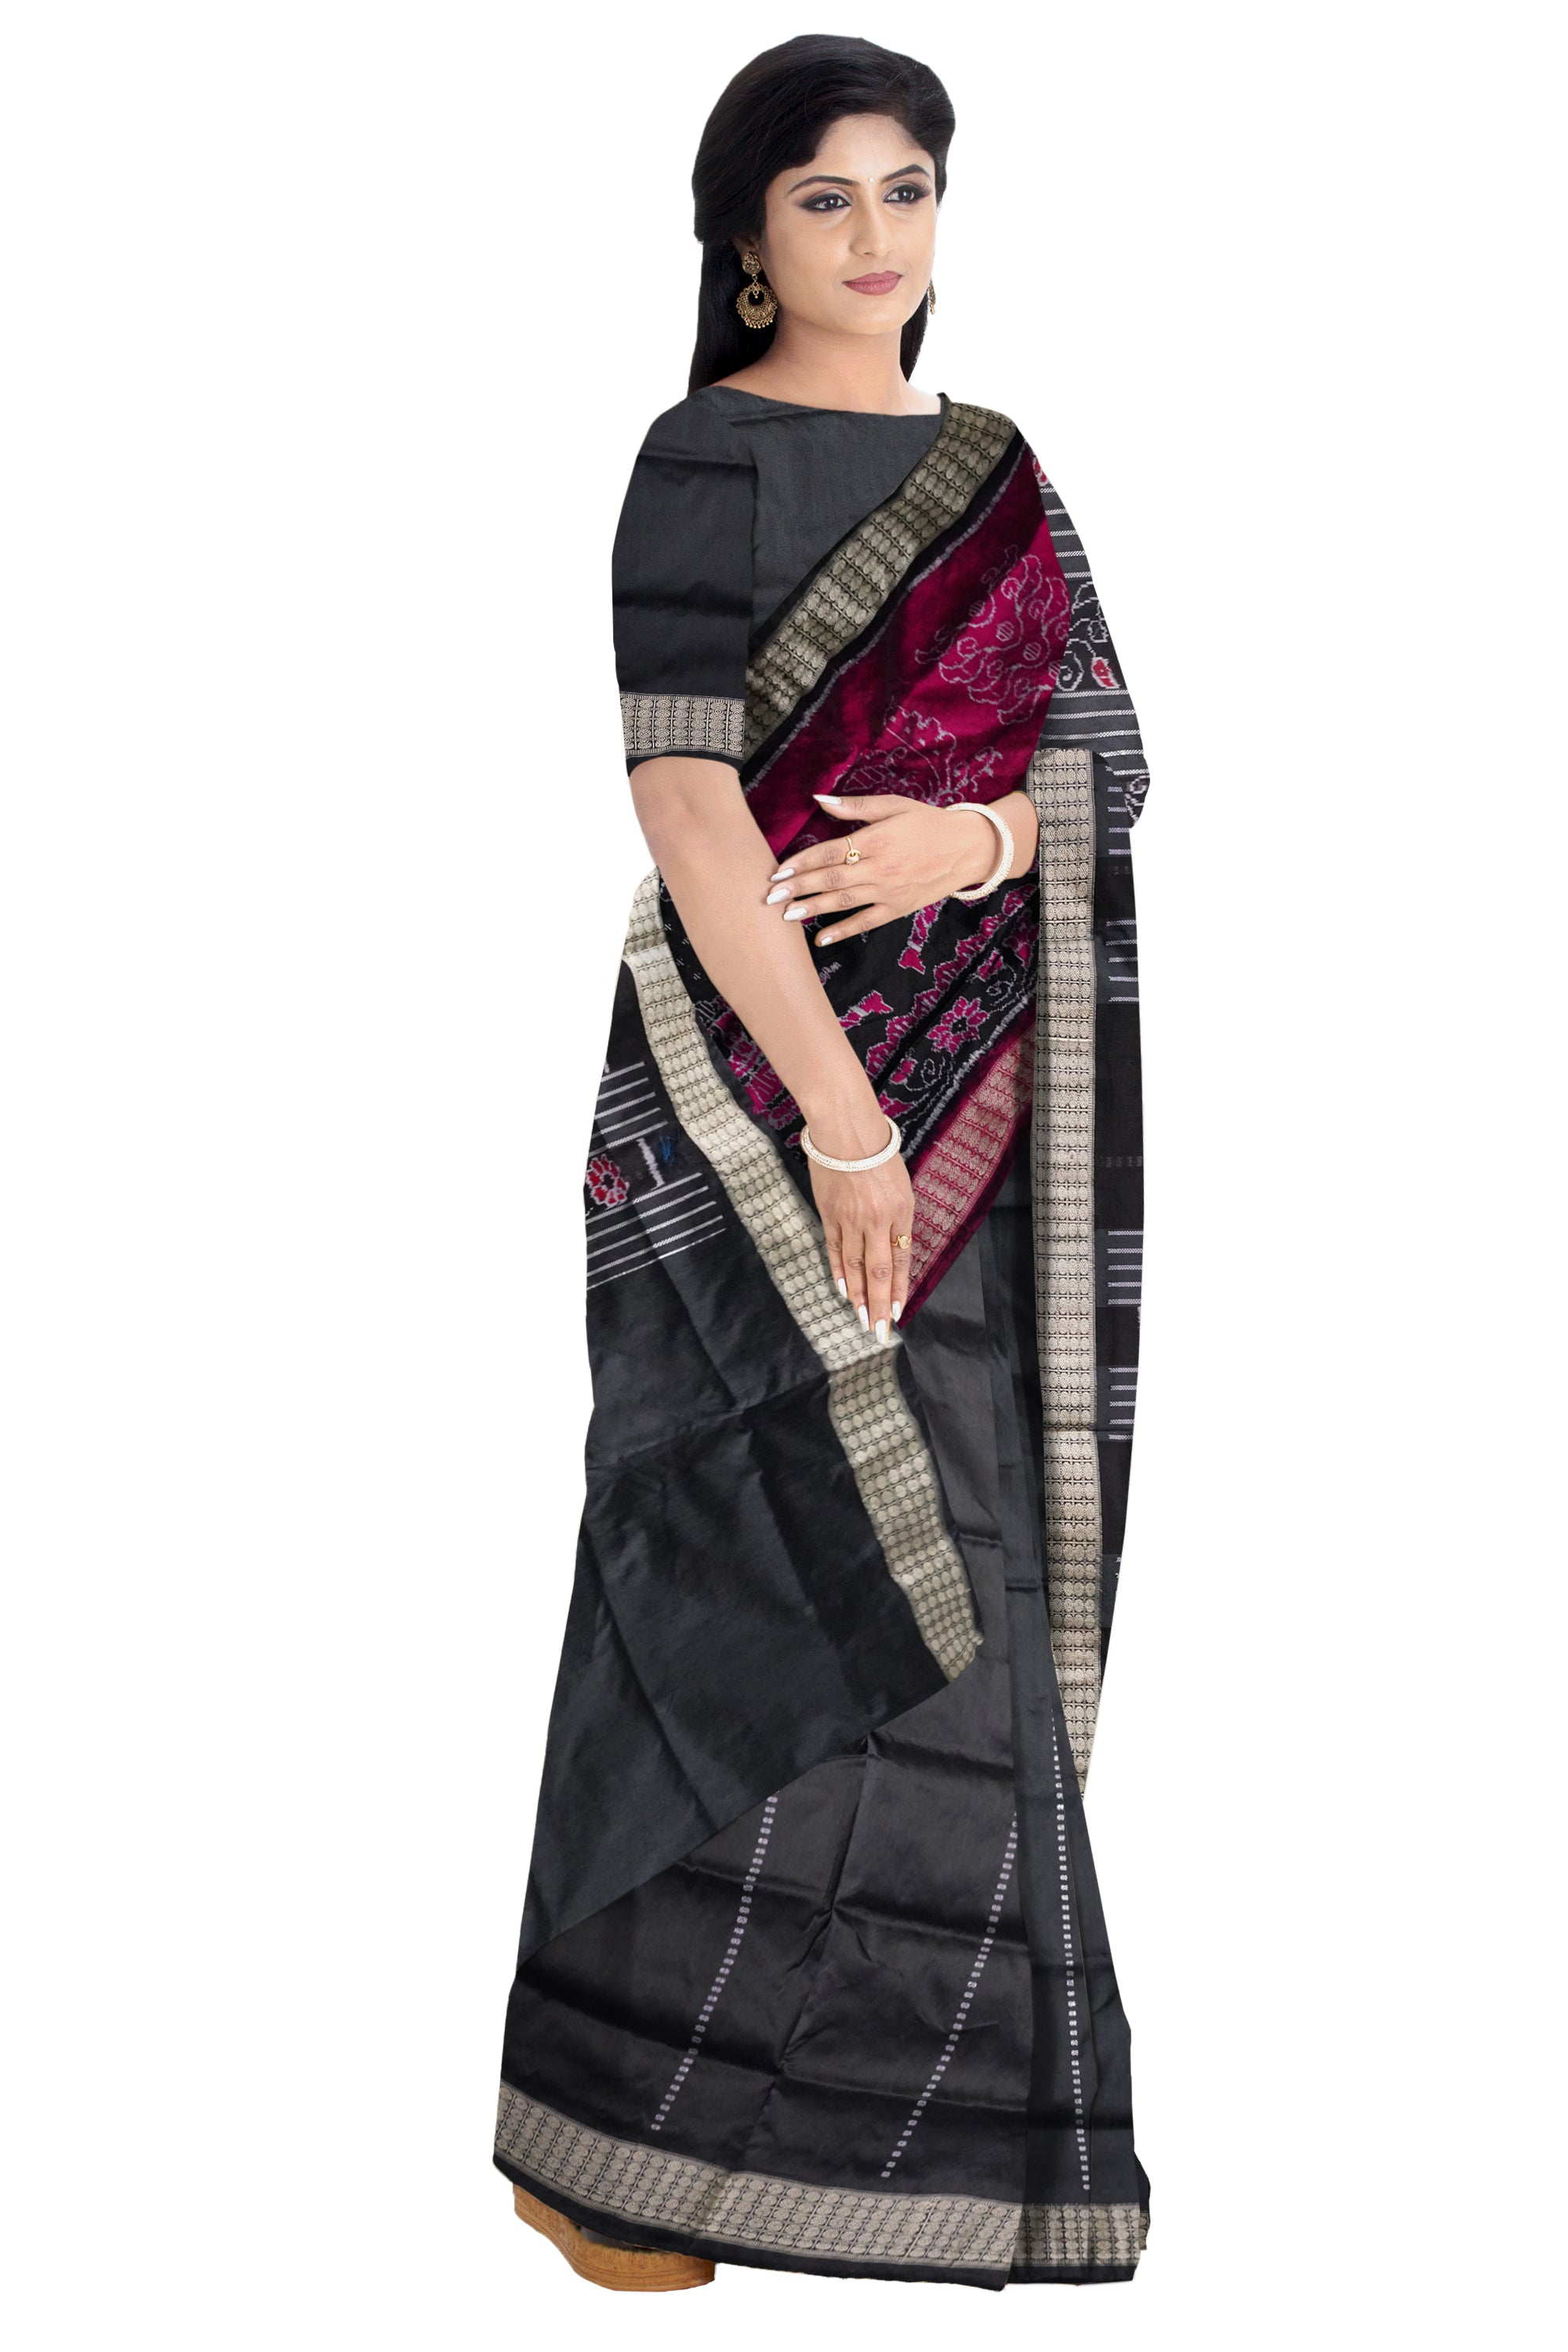 Nartaki with Peacock pattern patli pata saree in Deep-pink & Black color. - Koshali Arts & Crafts Enterprise